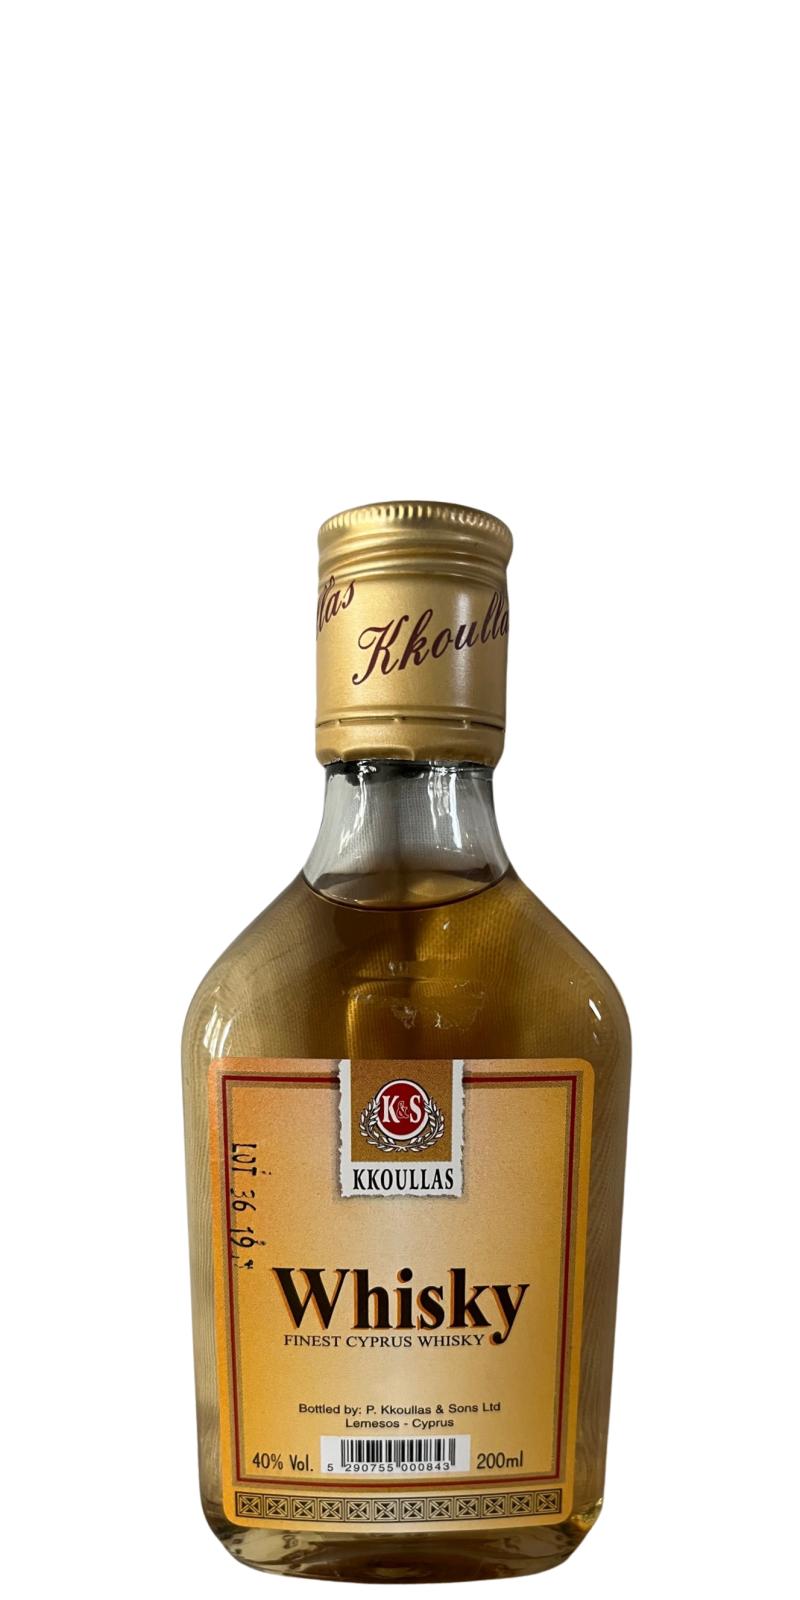 Kkoullas Whisky Finest Cyprus Whisky P. Kkoullas & Sons Ltod Lemesos Cyprus 40% 200ml